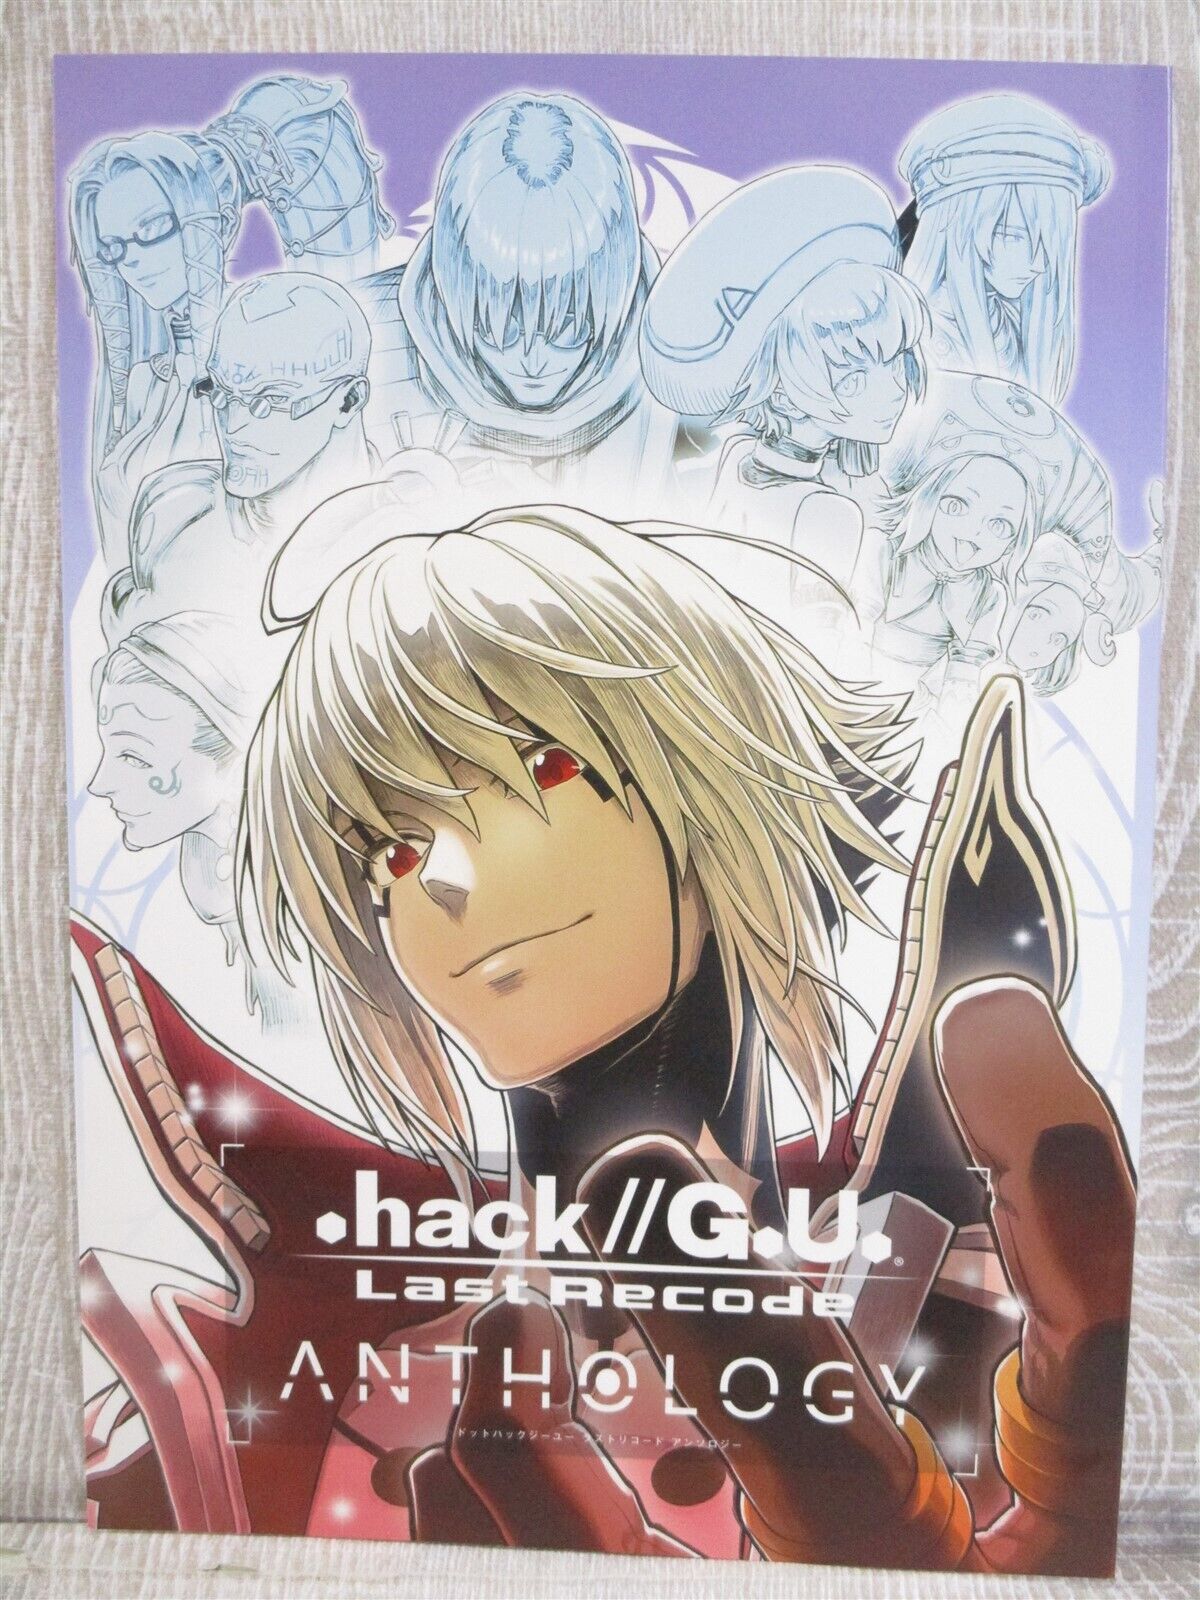 .hack // G.U. Last Recode Anthology Game Art PS4 Fan Book 2021 CC2 Japan Ltd